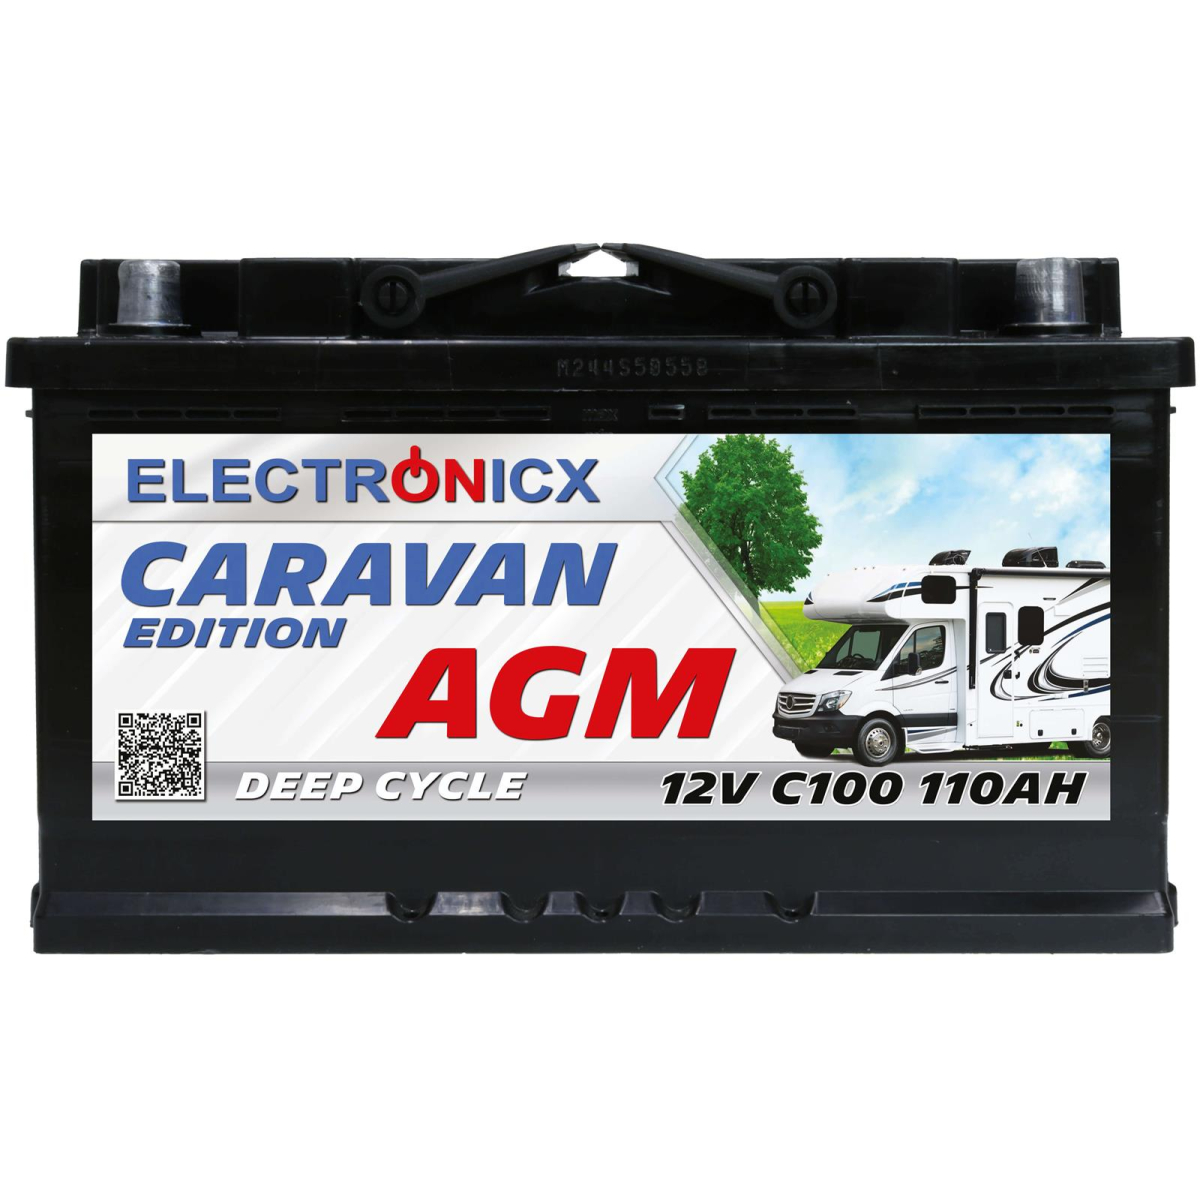 Electronicx Caravan Edition v2 battery agm 110 ah 12v motorhome boat supply